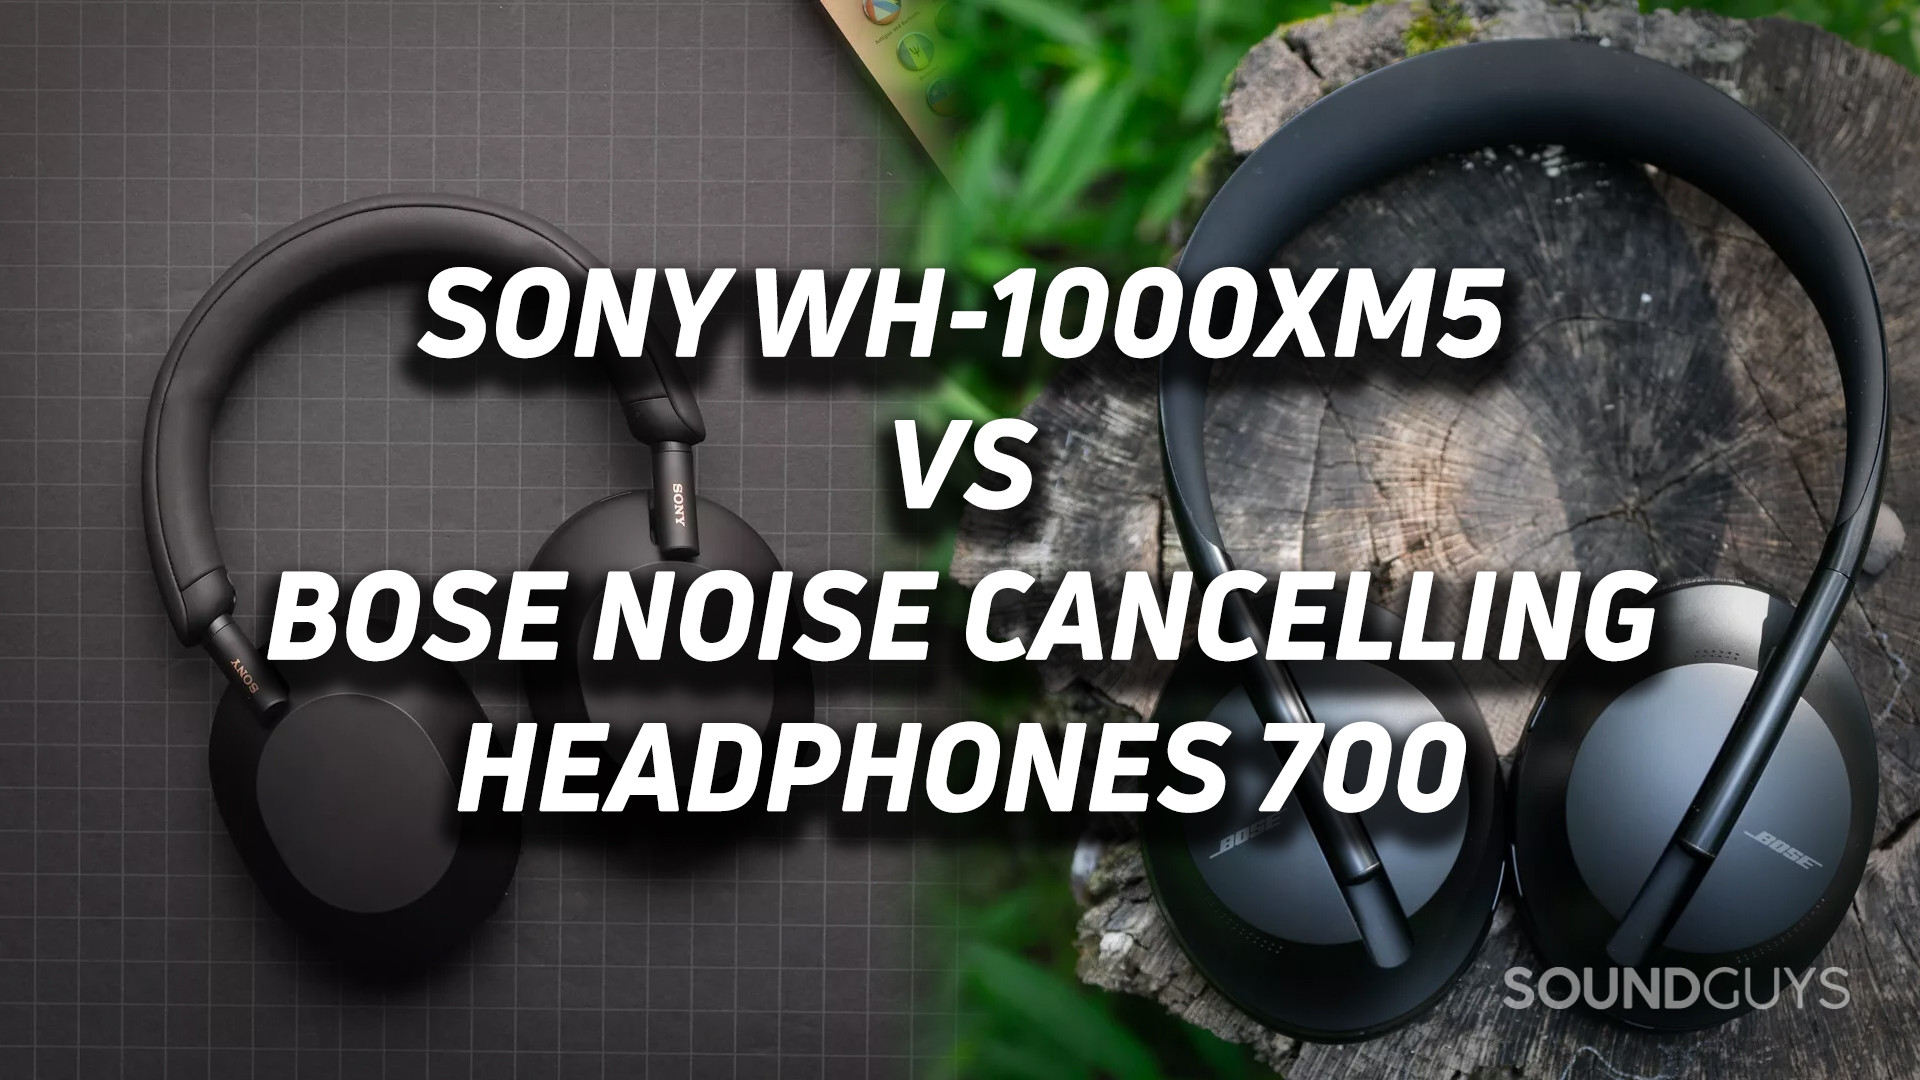 Sony XM5 Wireless Noise Cancelling Headphone WH1000XM5 WH-1000XM5 1000XM5  1000X